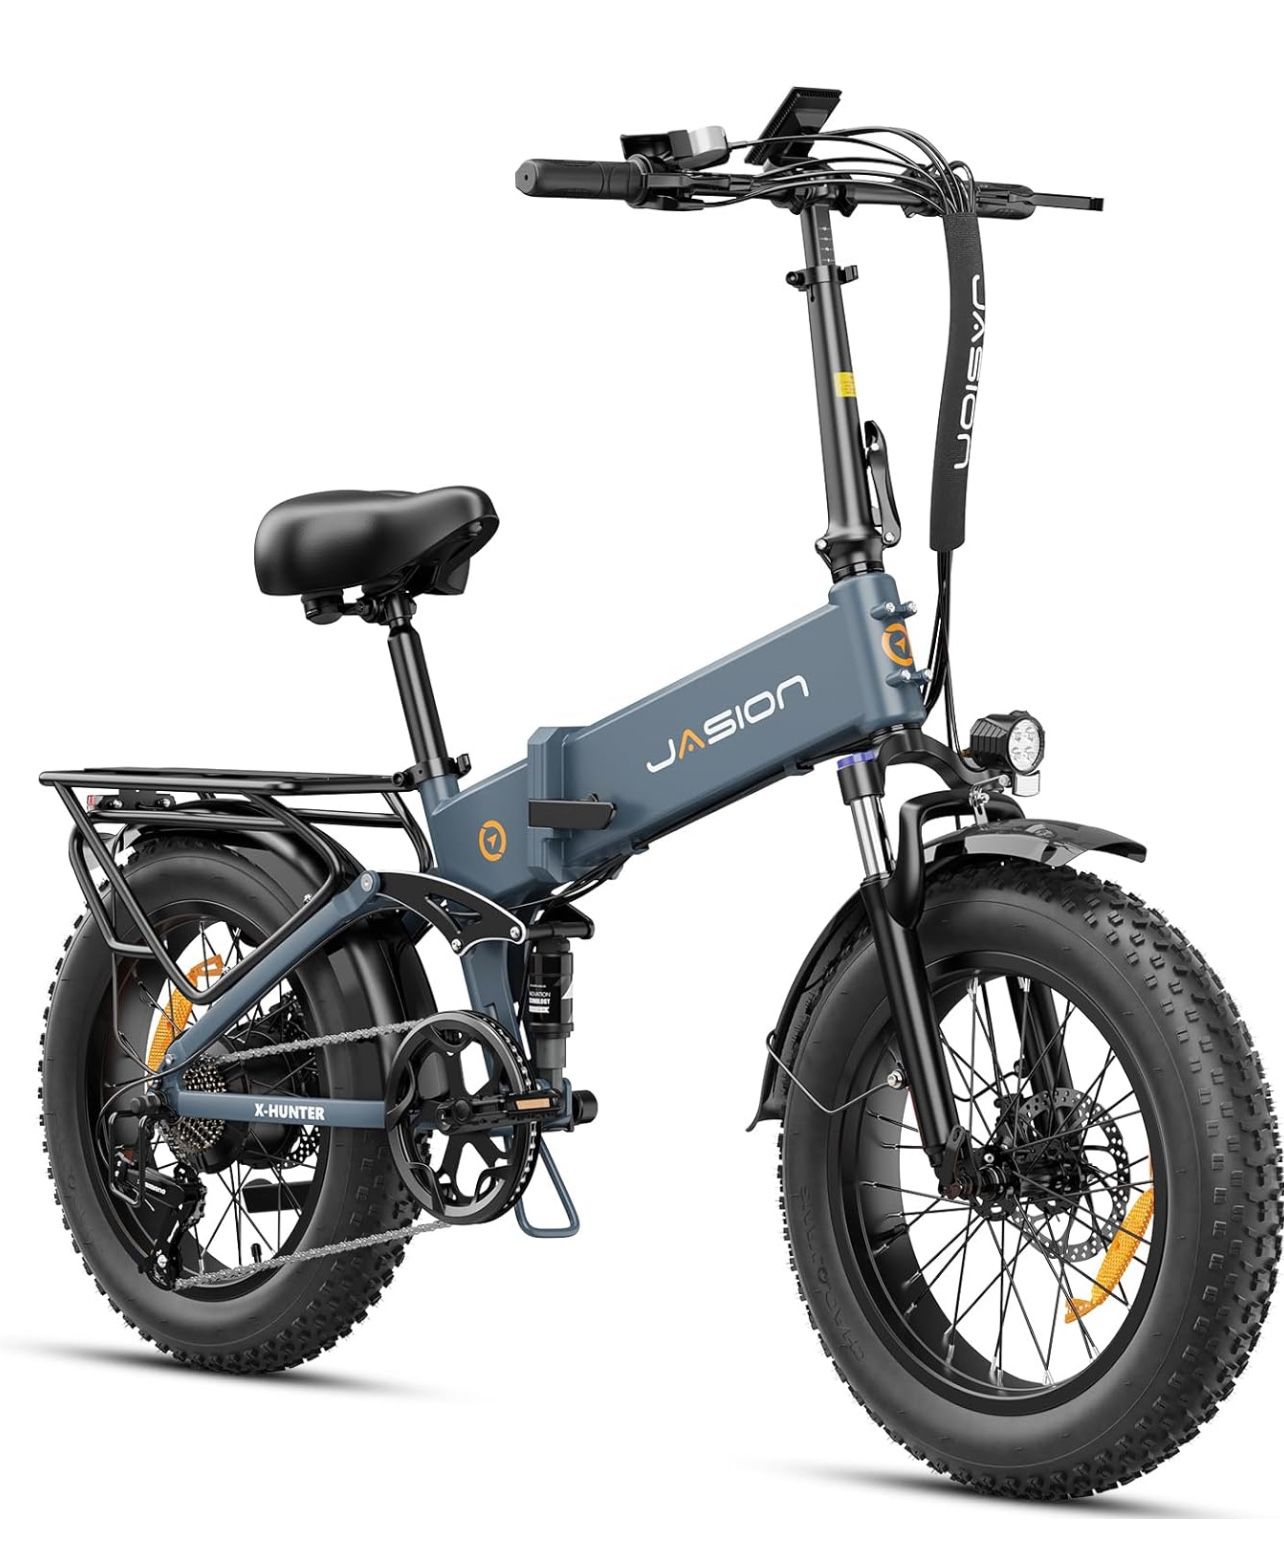 Brand new Sealed Jasion X-Hunter E-bike W/Basket